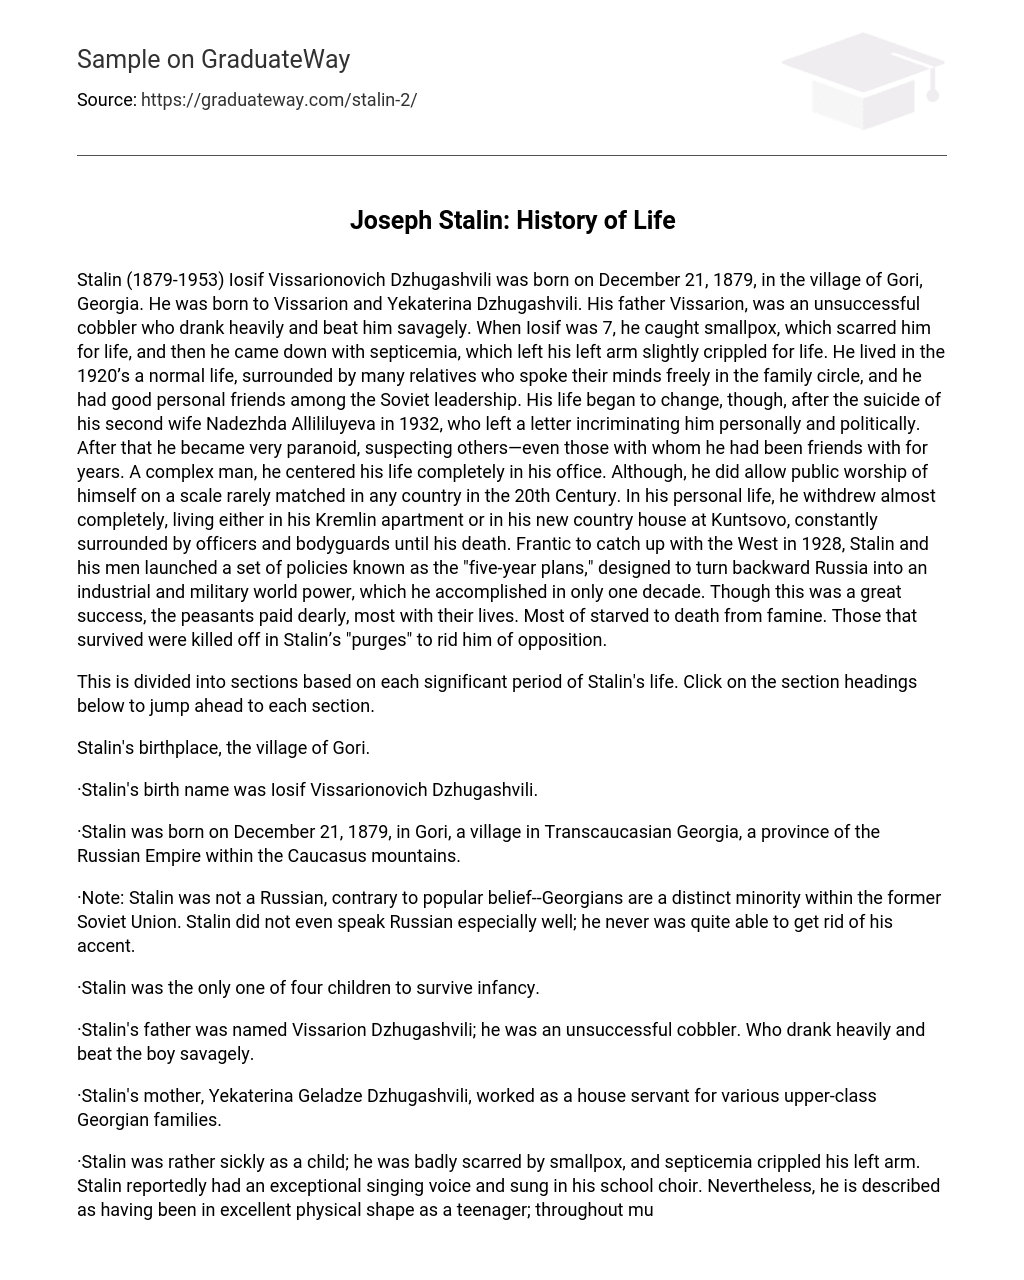 Joseph Stalin: History of Life